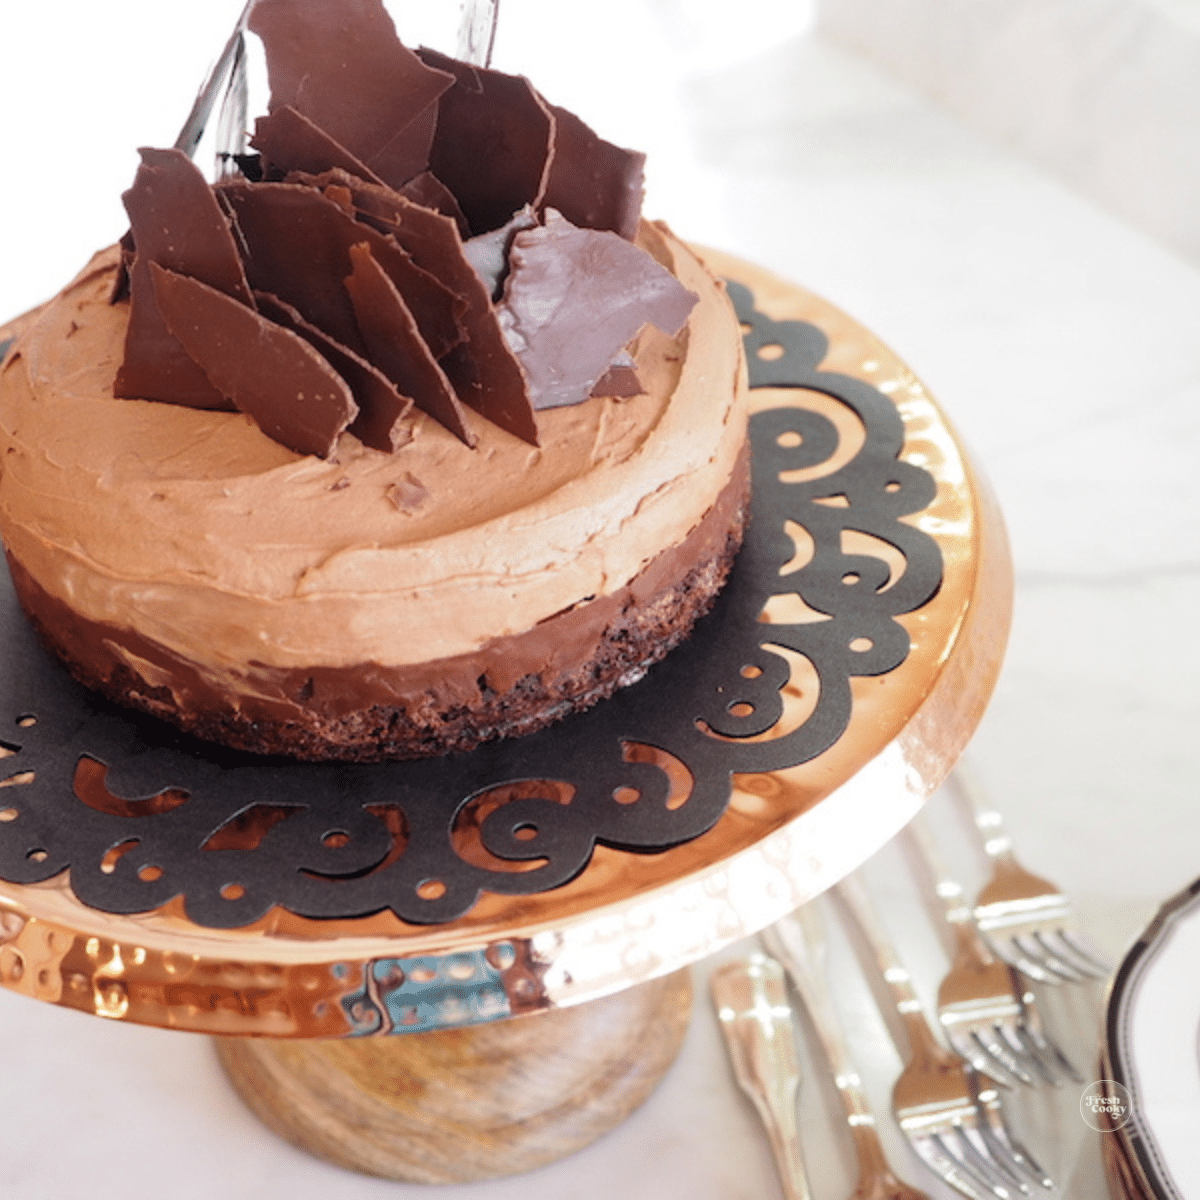 Death by chocolate cake, triple chocolate layered torte.